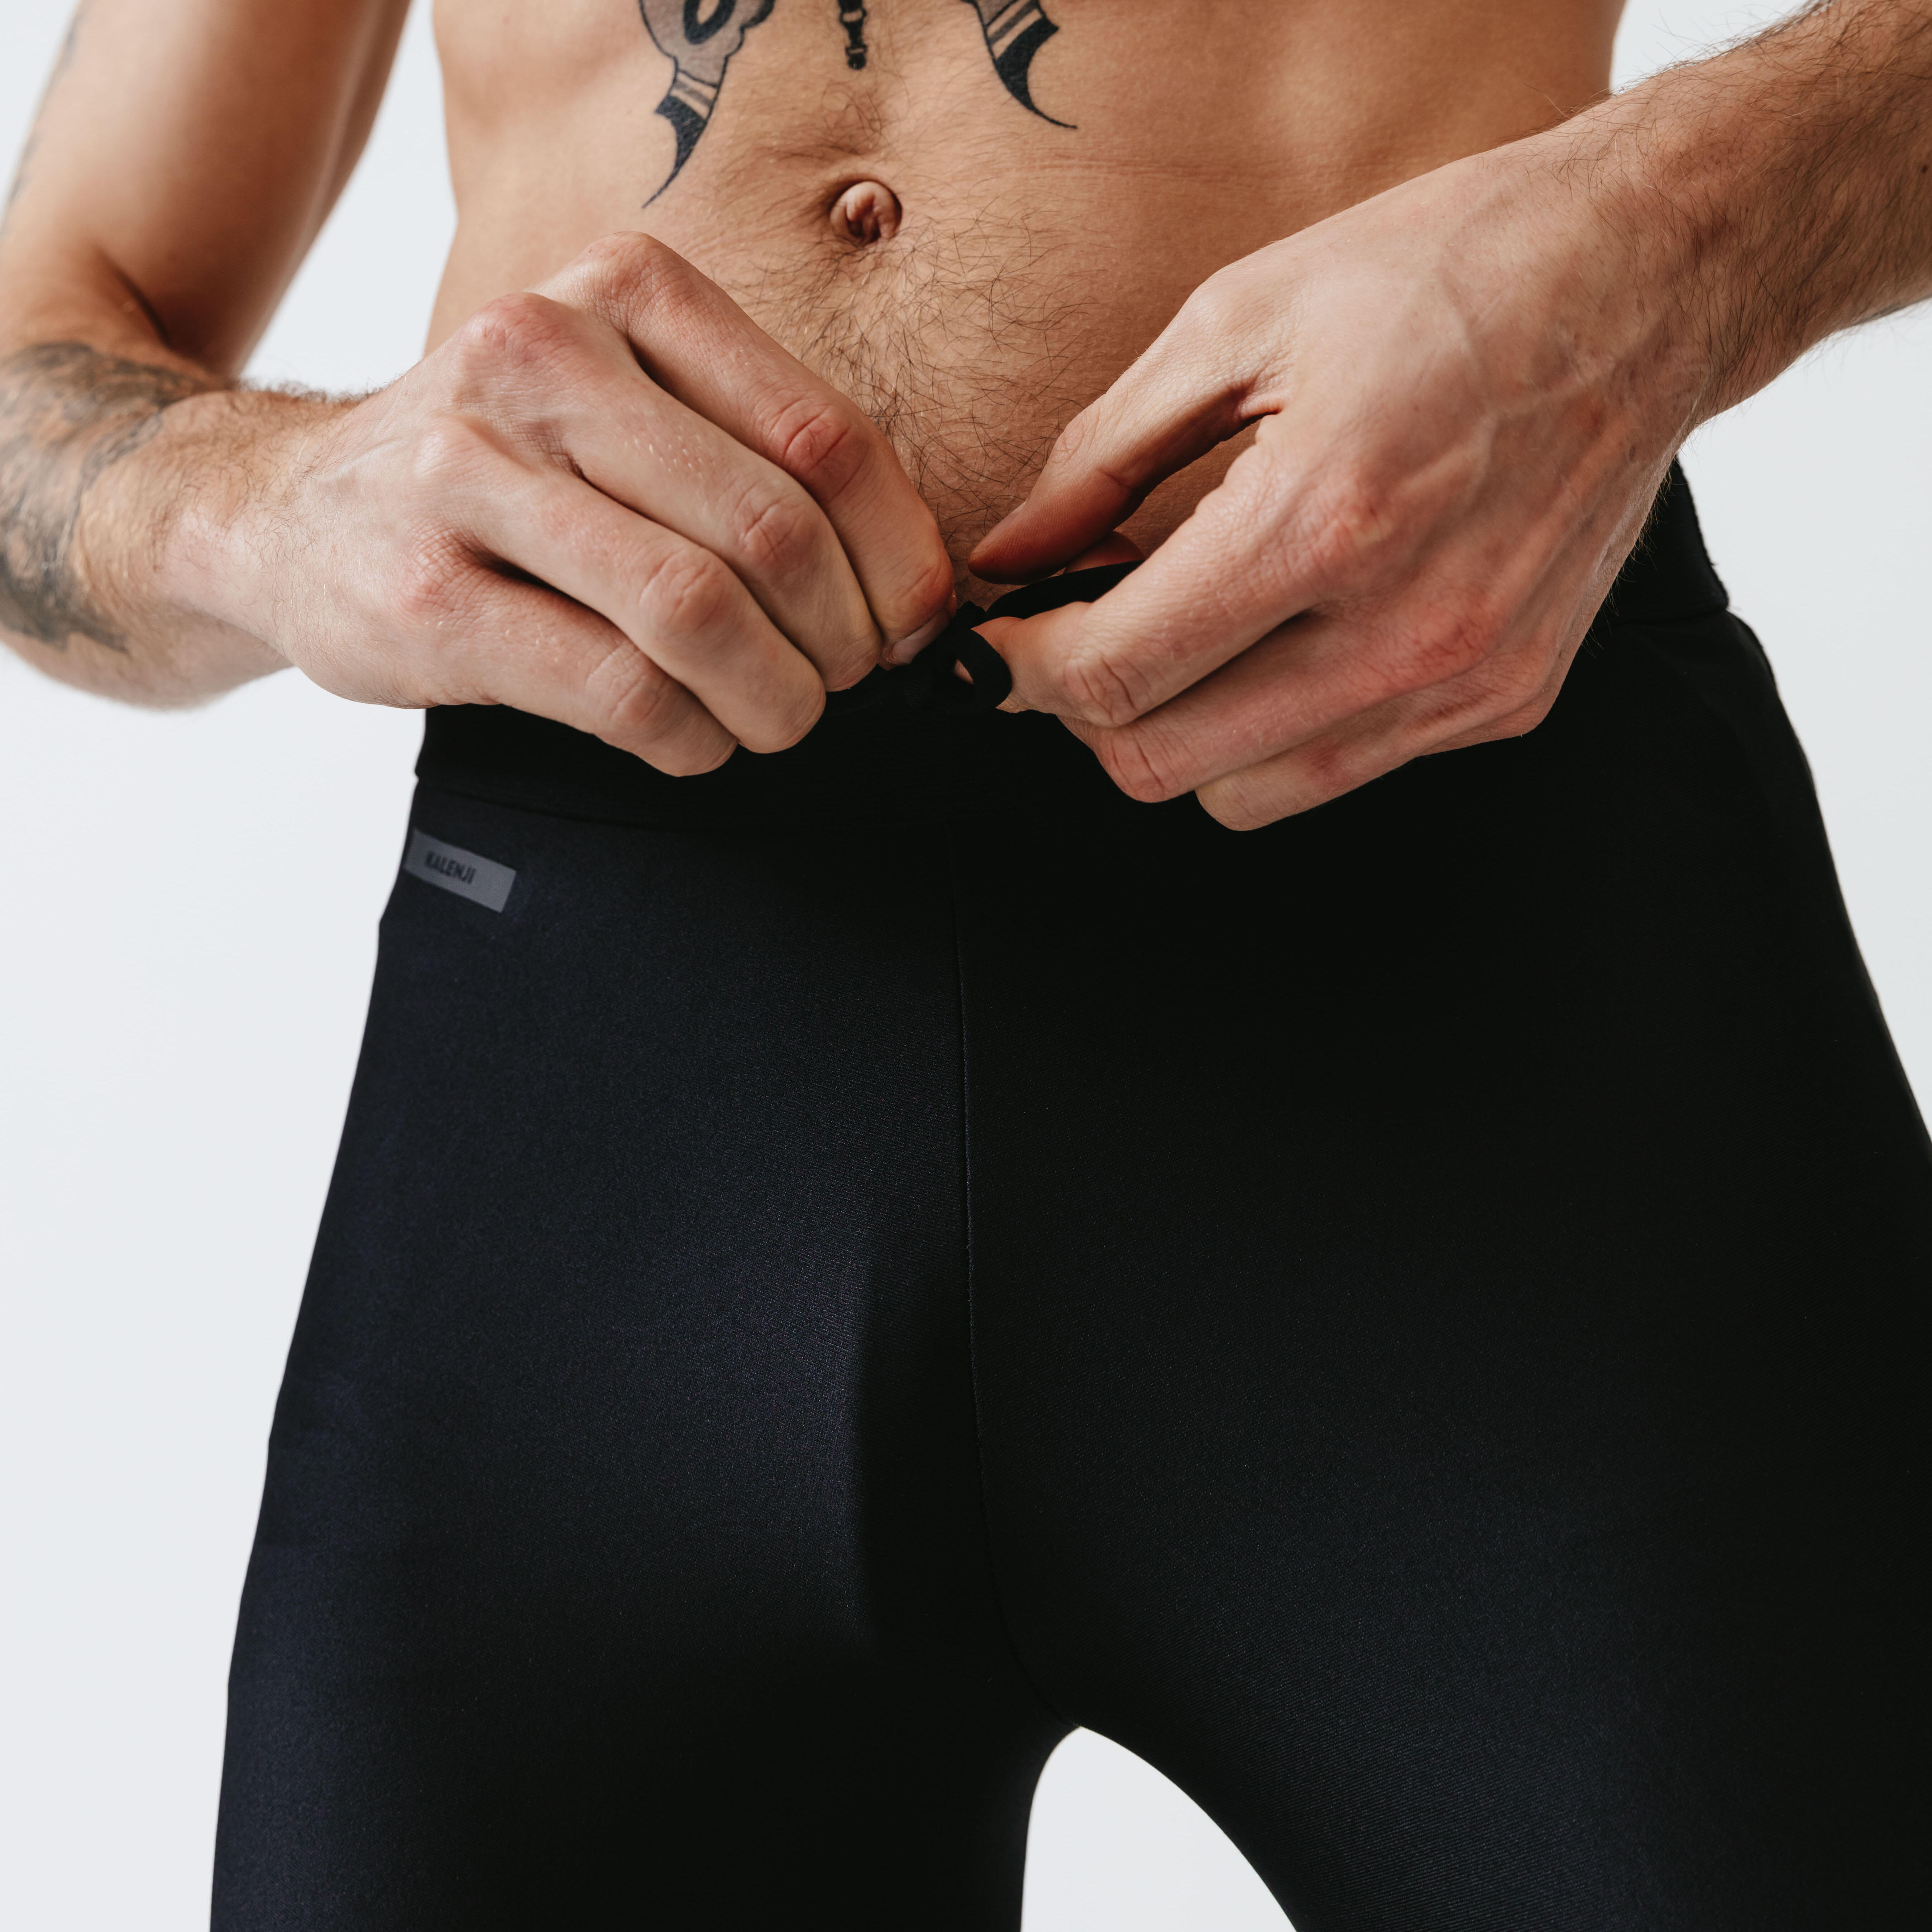 Buy Men's Running Breathable Long Tights Dry - Black Online